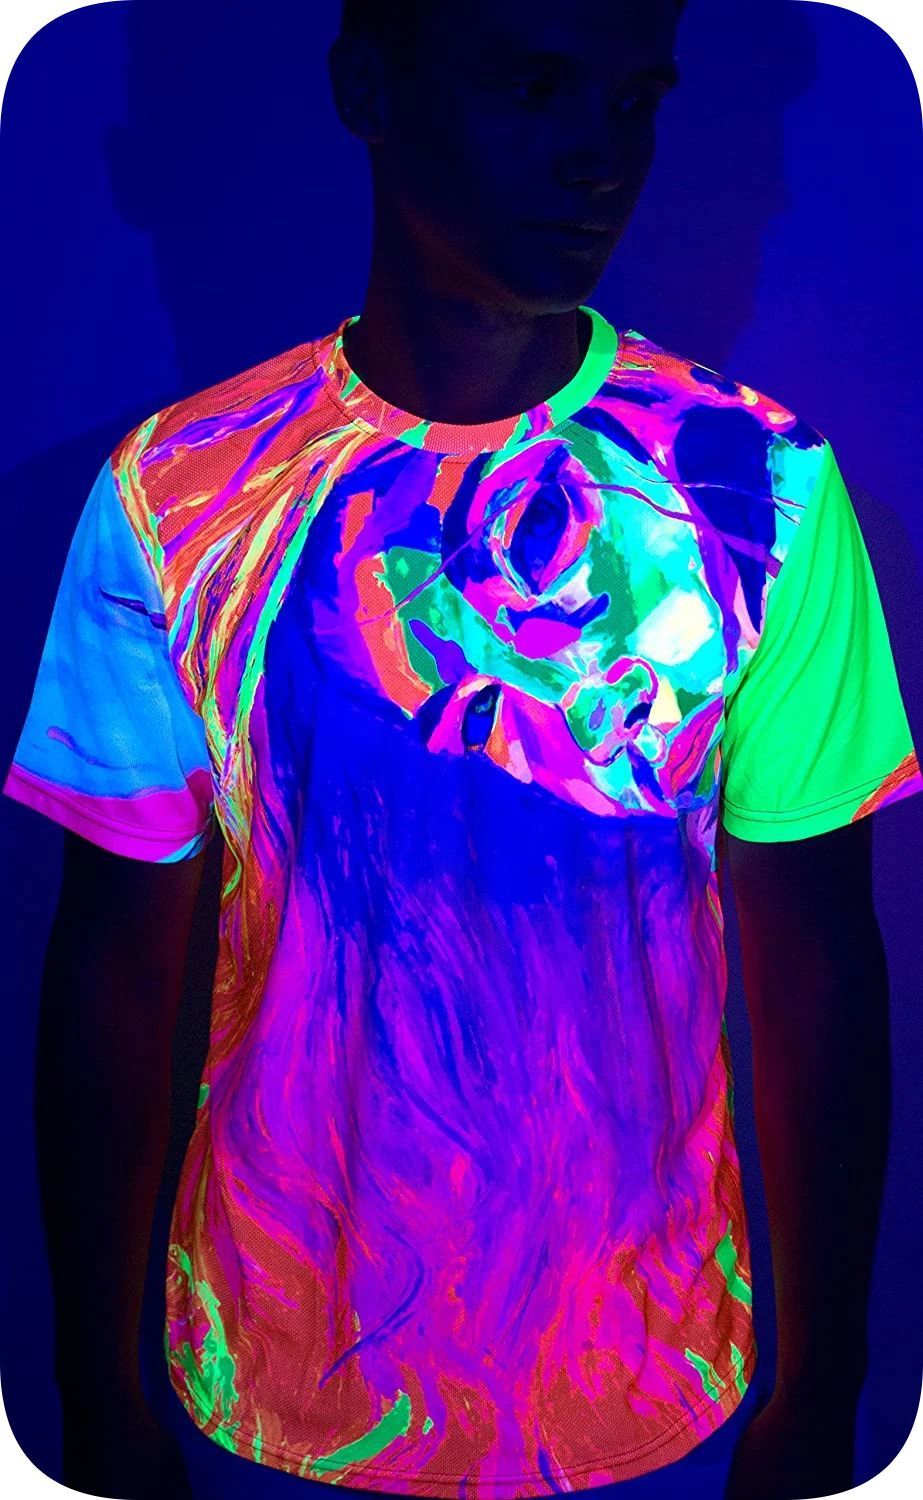 Blacklight T-Shirt Ideas Glow in Ultraviolet Fluorescent Model April ts9